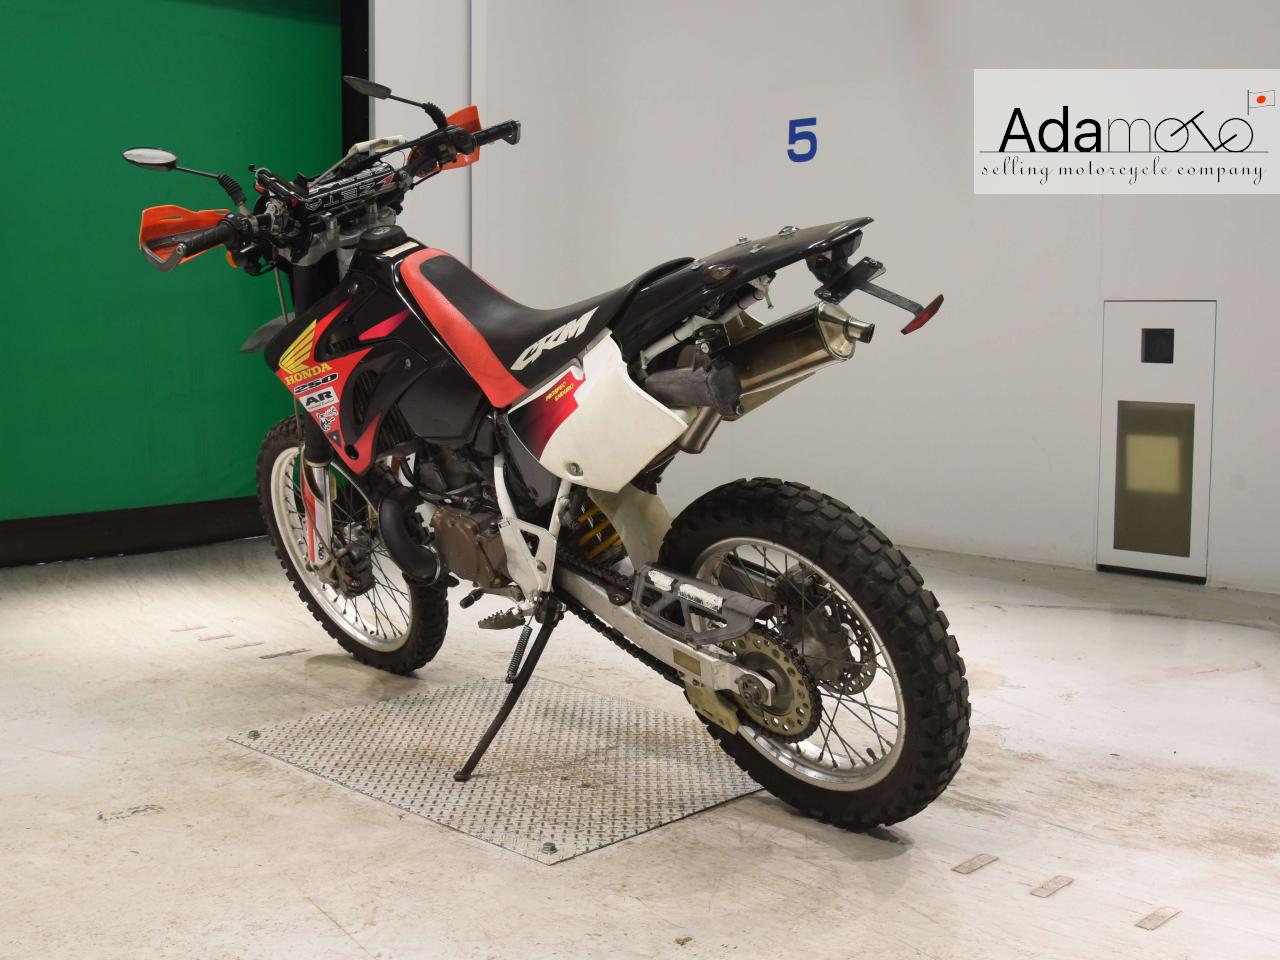 Honda CRM250AR - Adamoto - Motorcycles from Japan